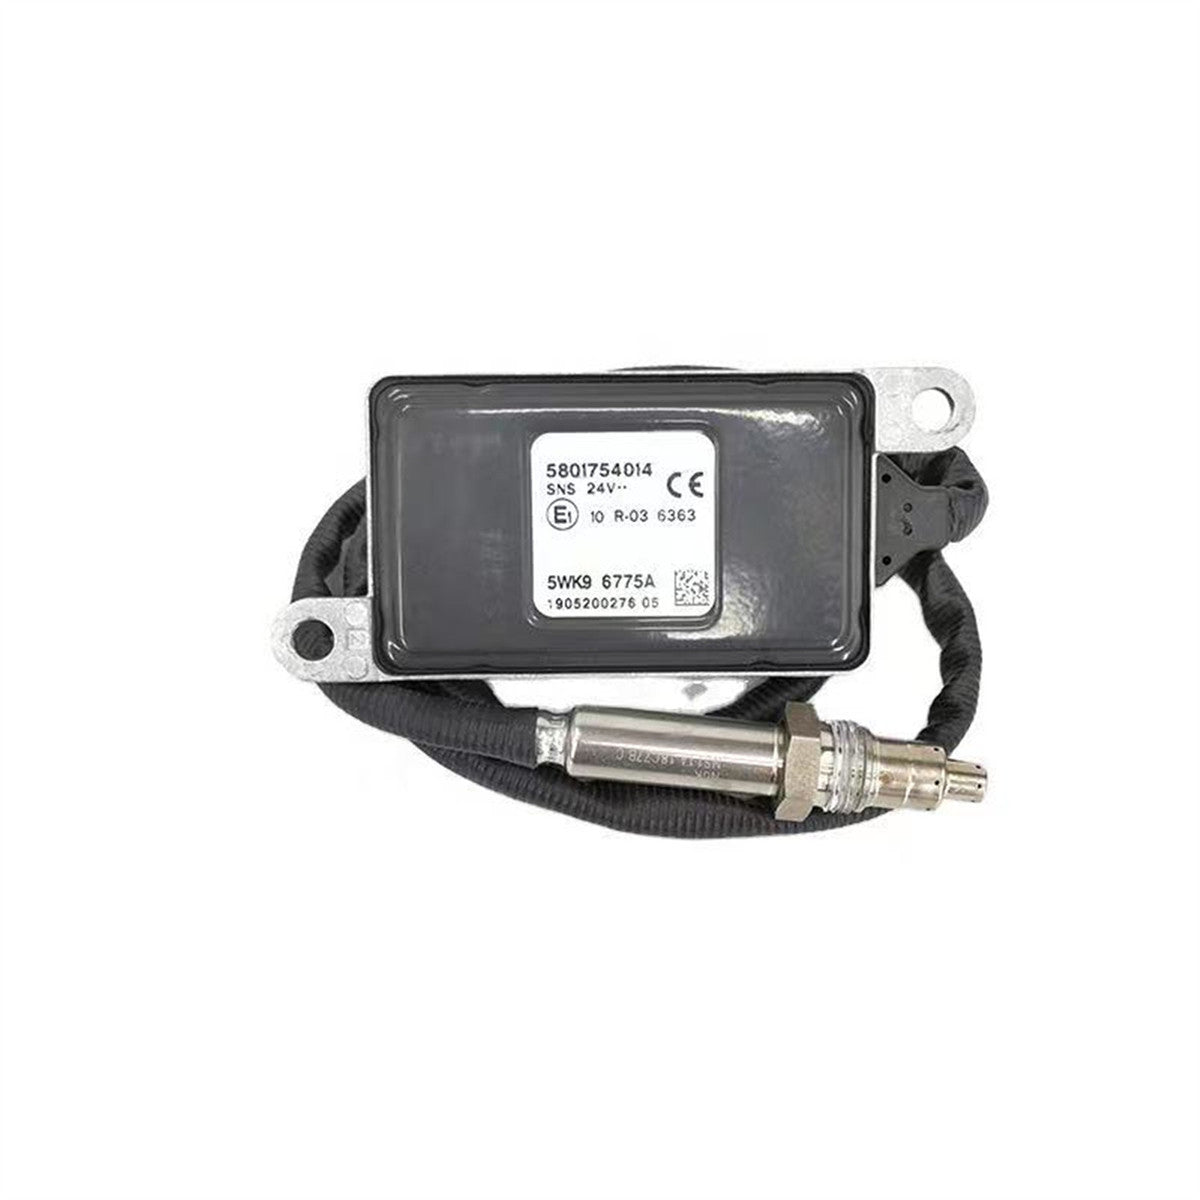 Nox Sensor 5WK96775A 5801754014 Nitrogen Oxygen Sensor For Iveco Euro CARGO STRALIS - Sinocmp